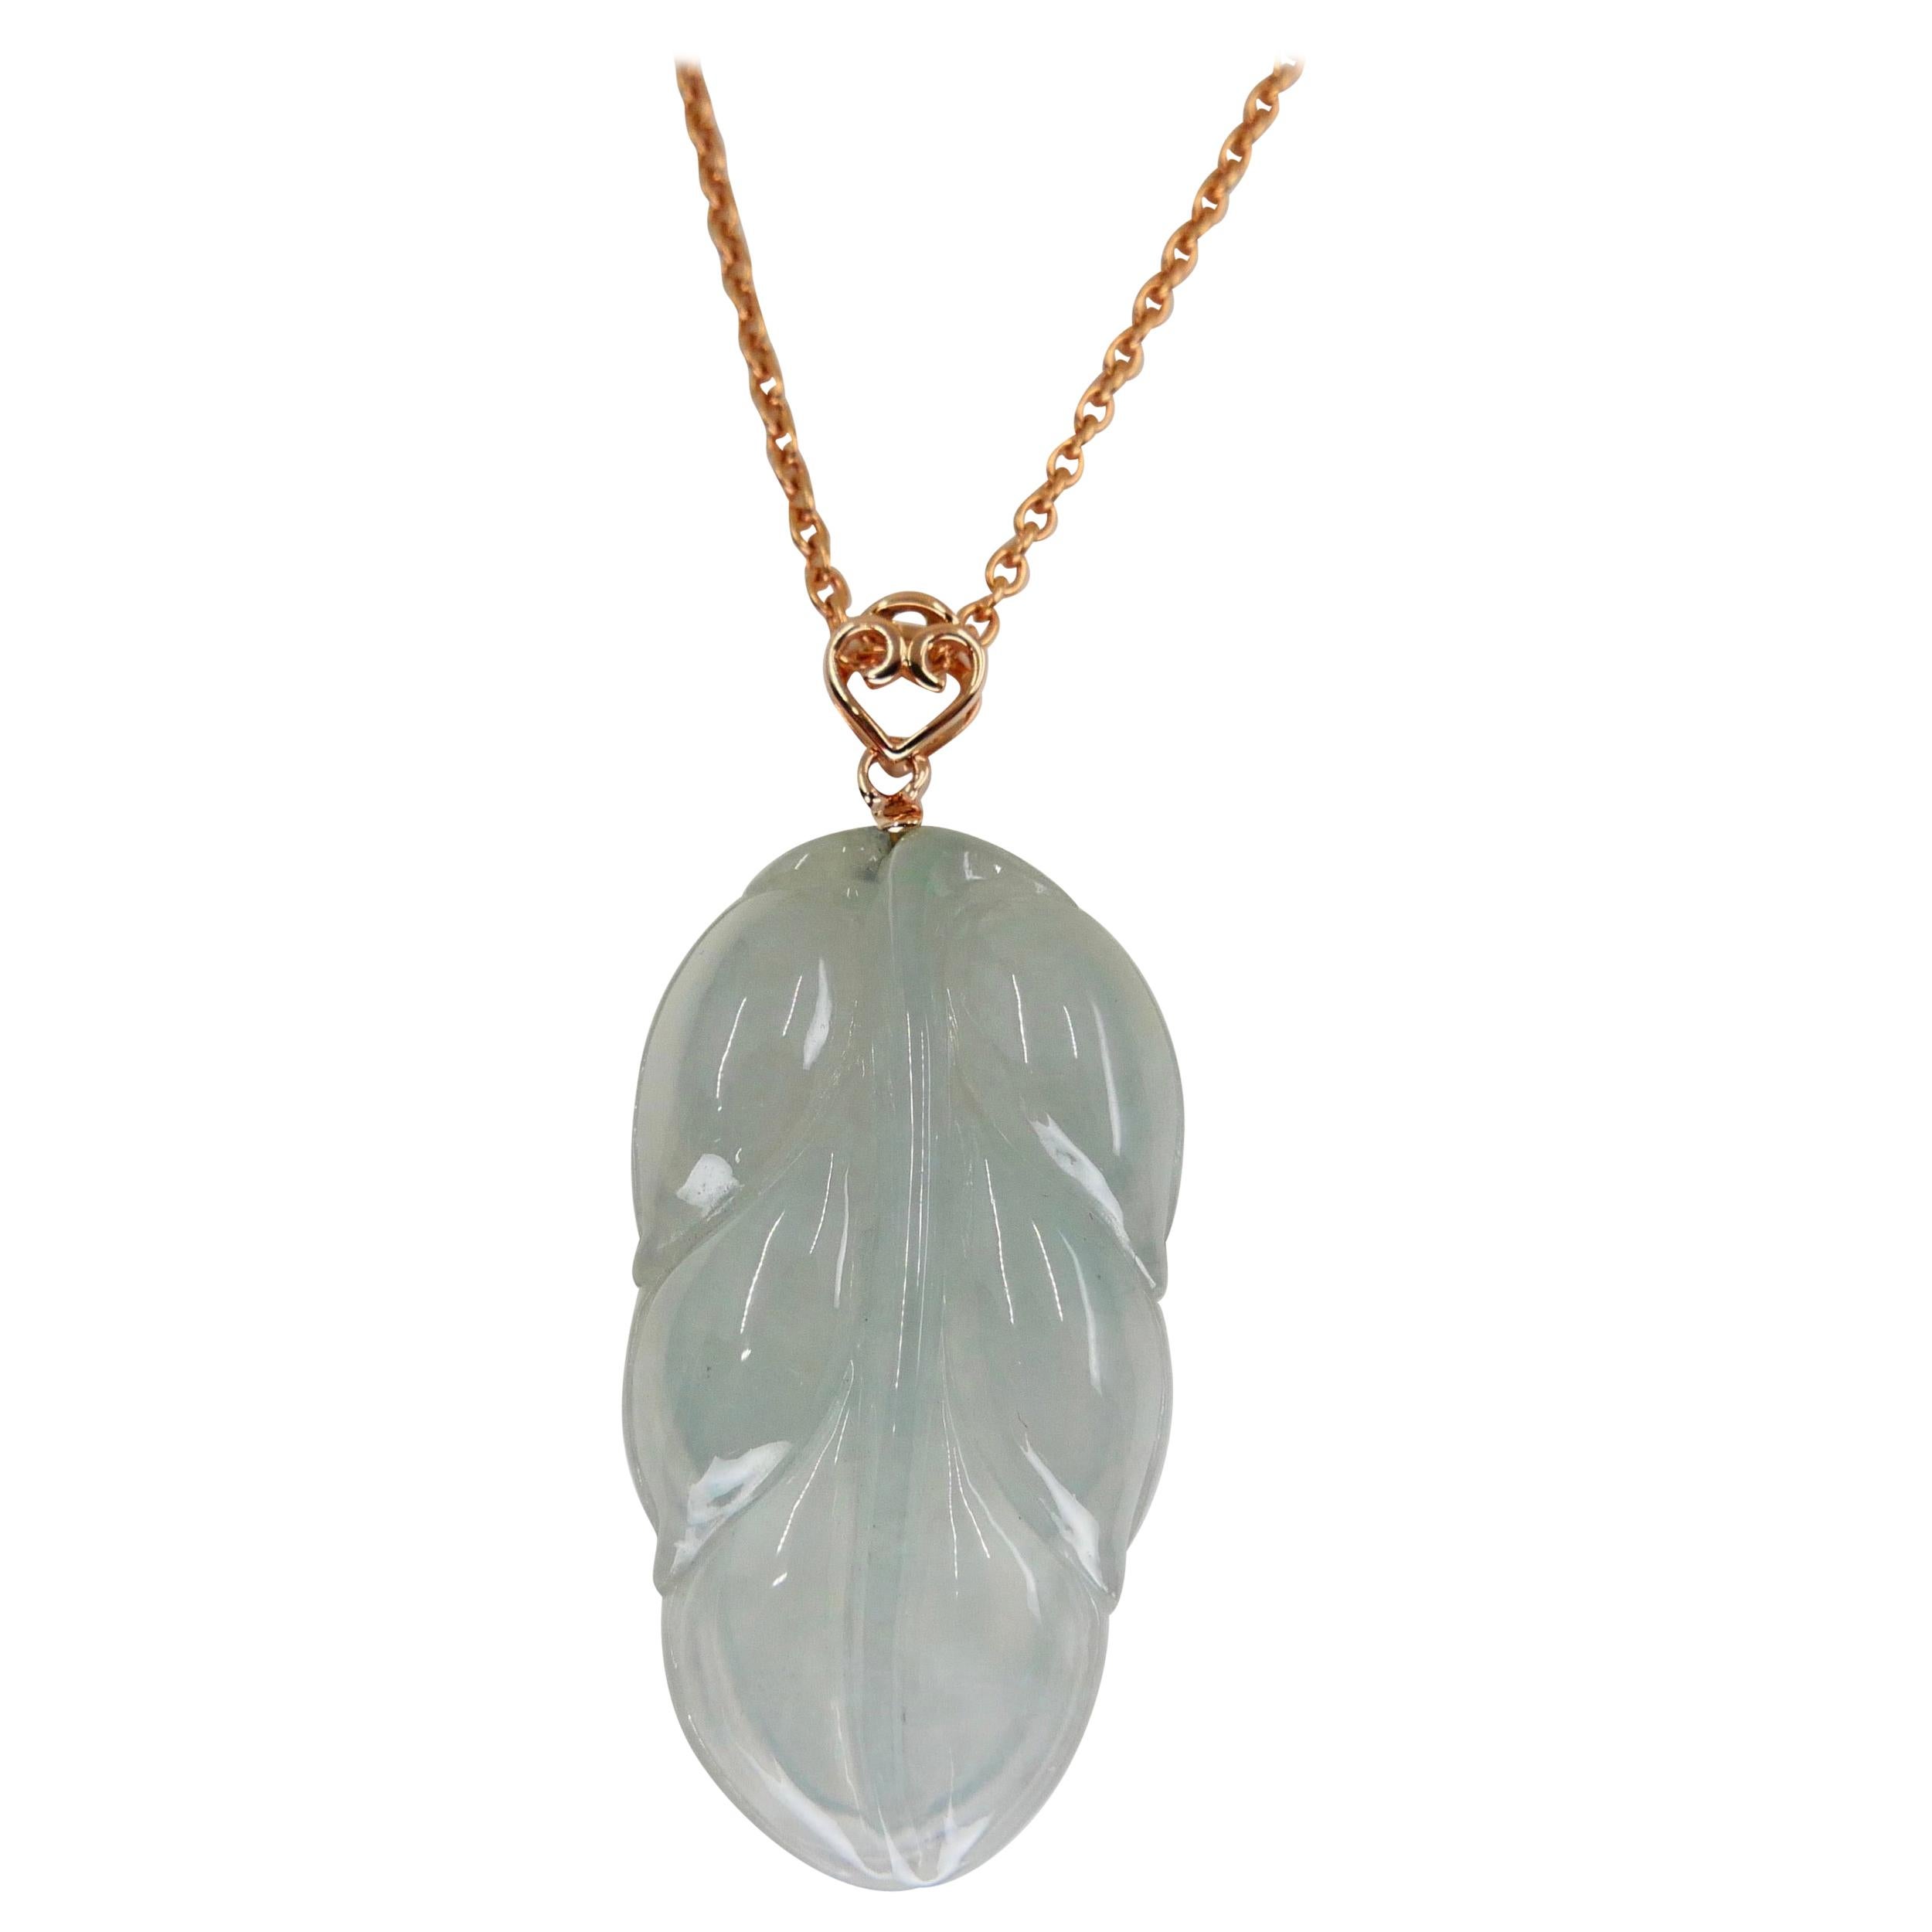 Certified 20.84 Carat Icy Jadeite Jade Leaf Pendant Necklace, Good Fortune For Sale